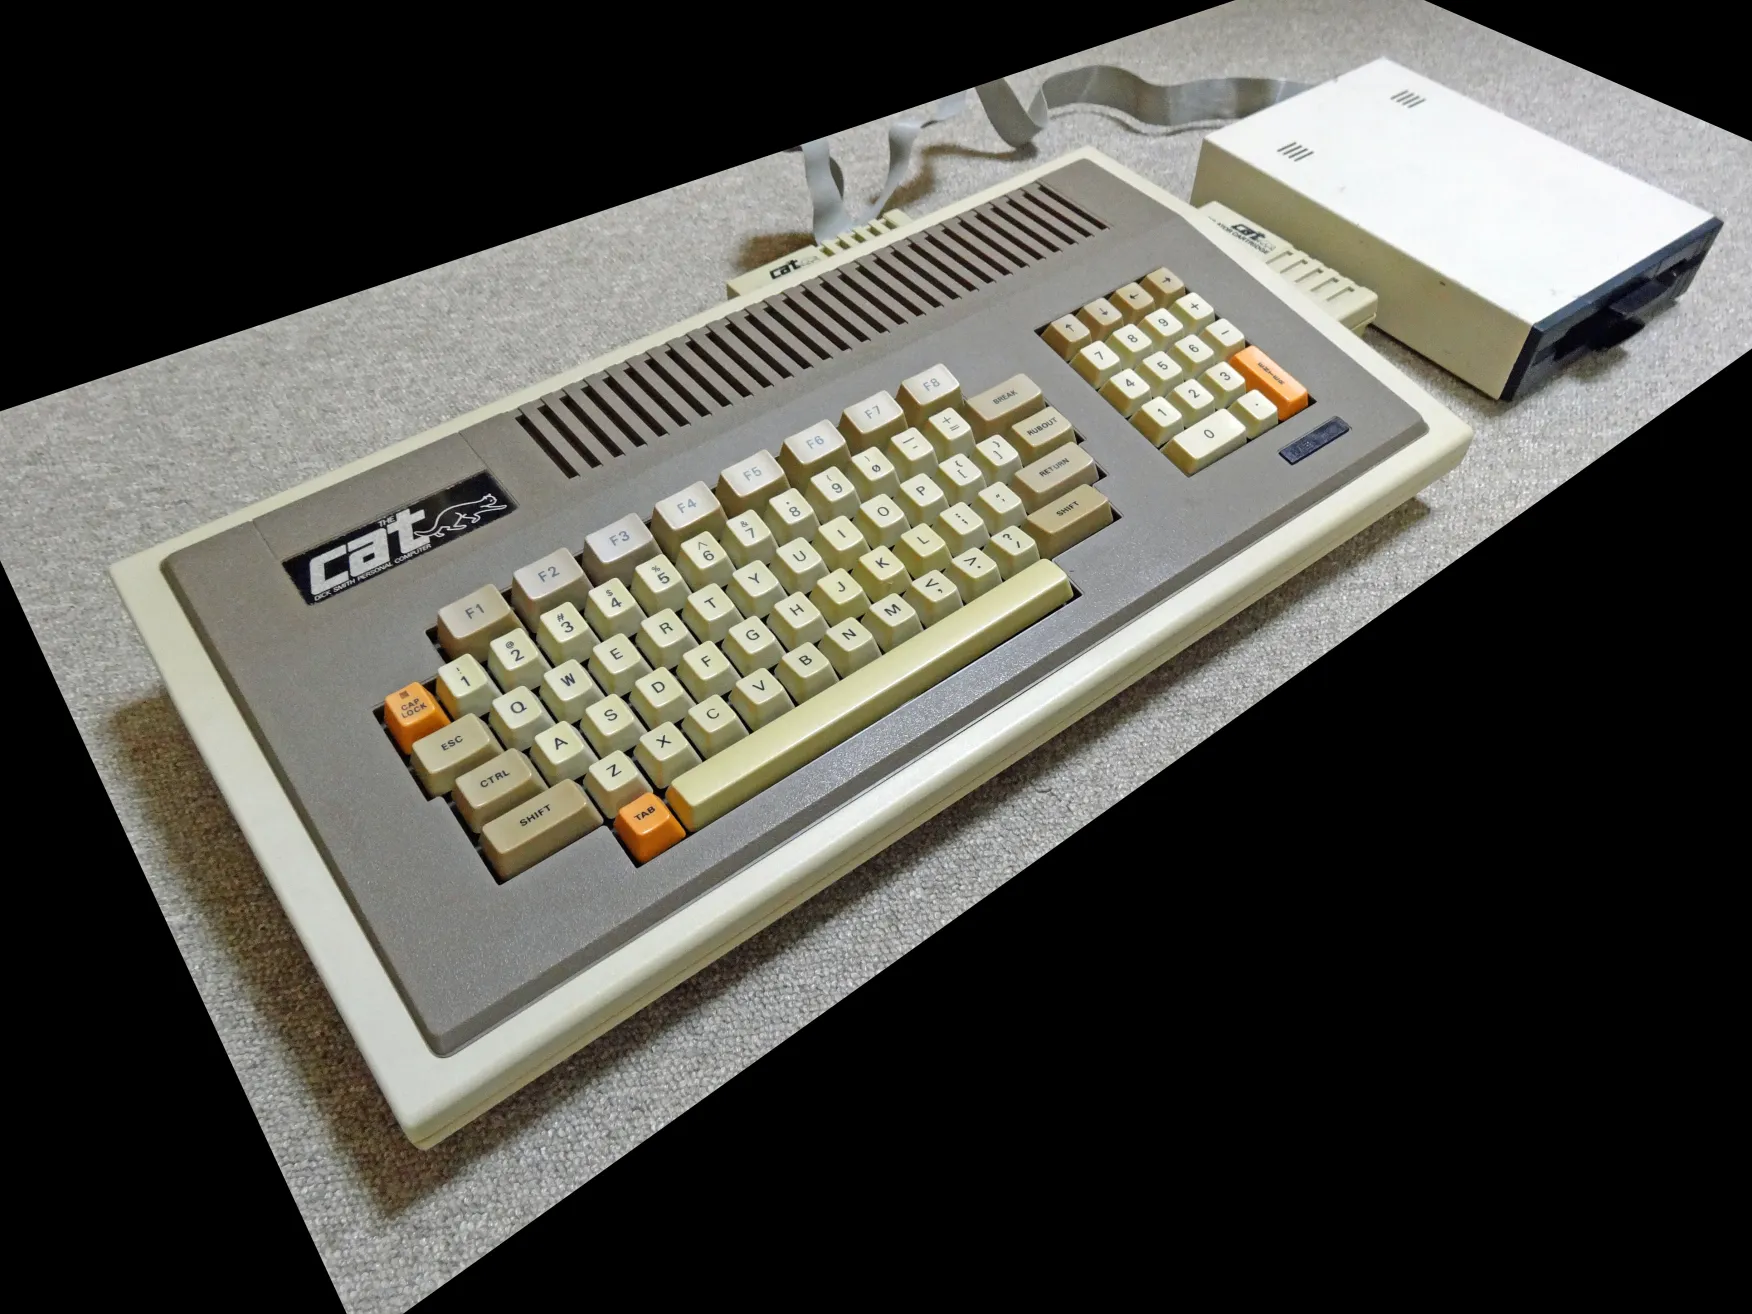 CAT - Apple II clone courtesy oscilloclock.com